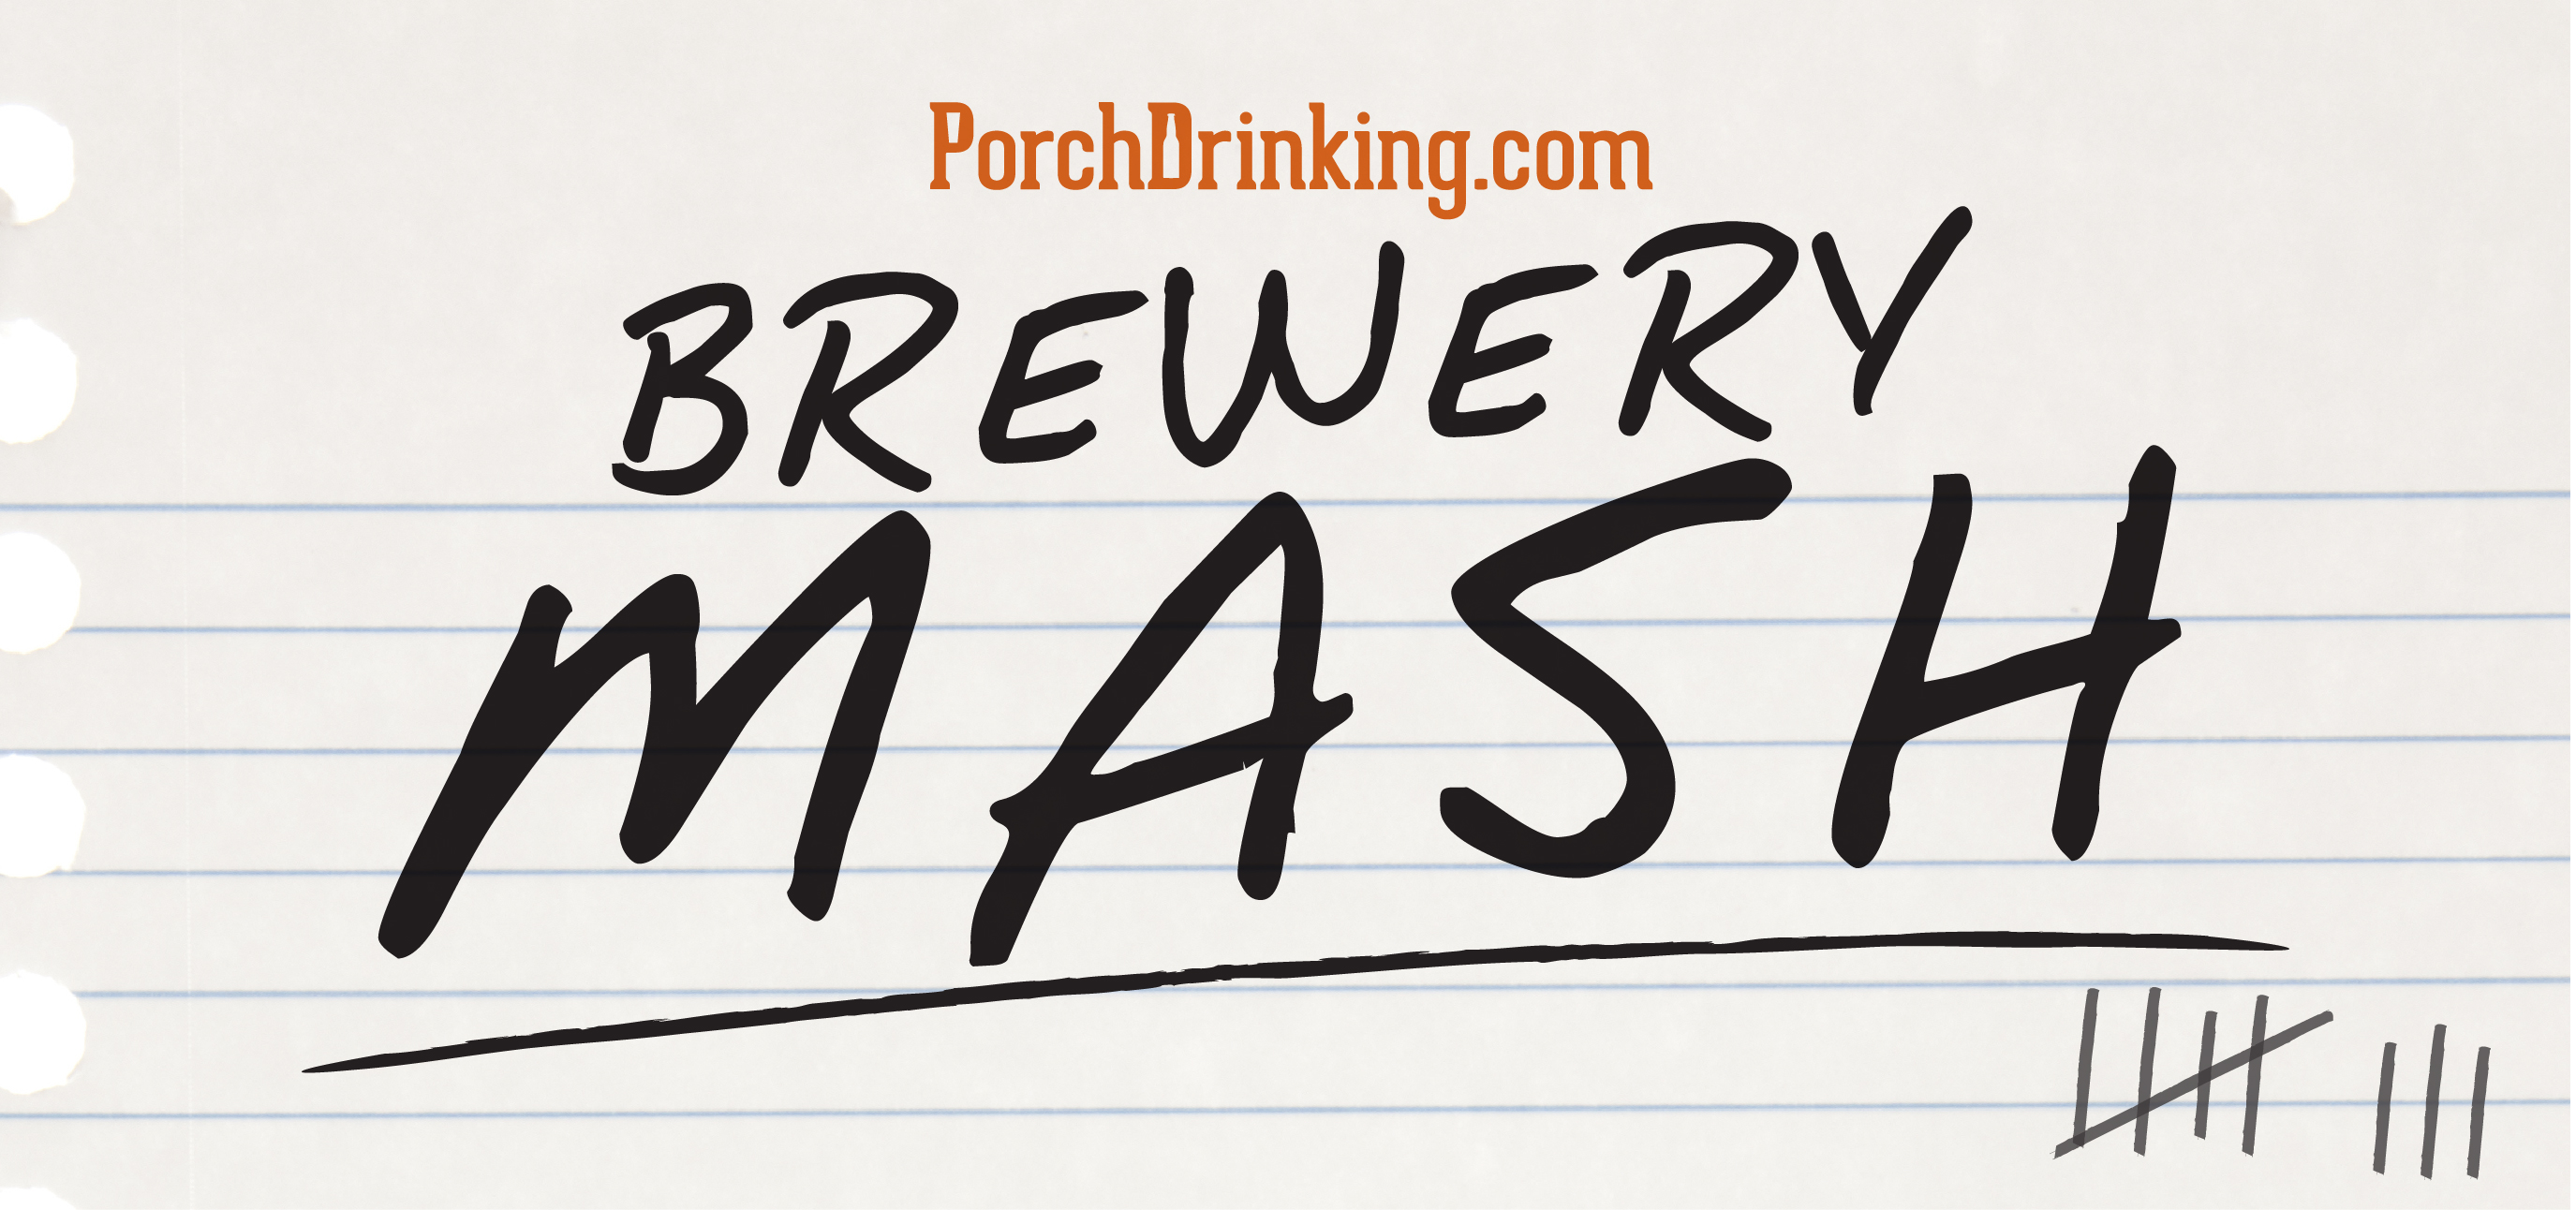 Brewery MASH